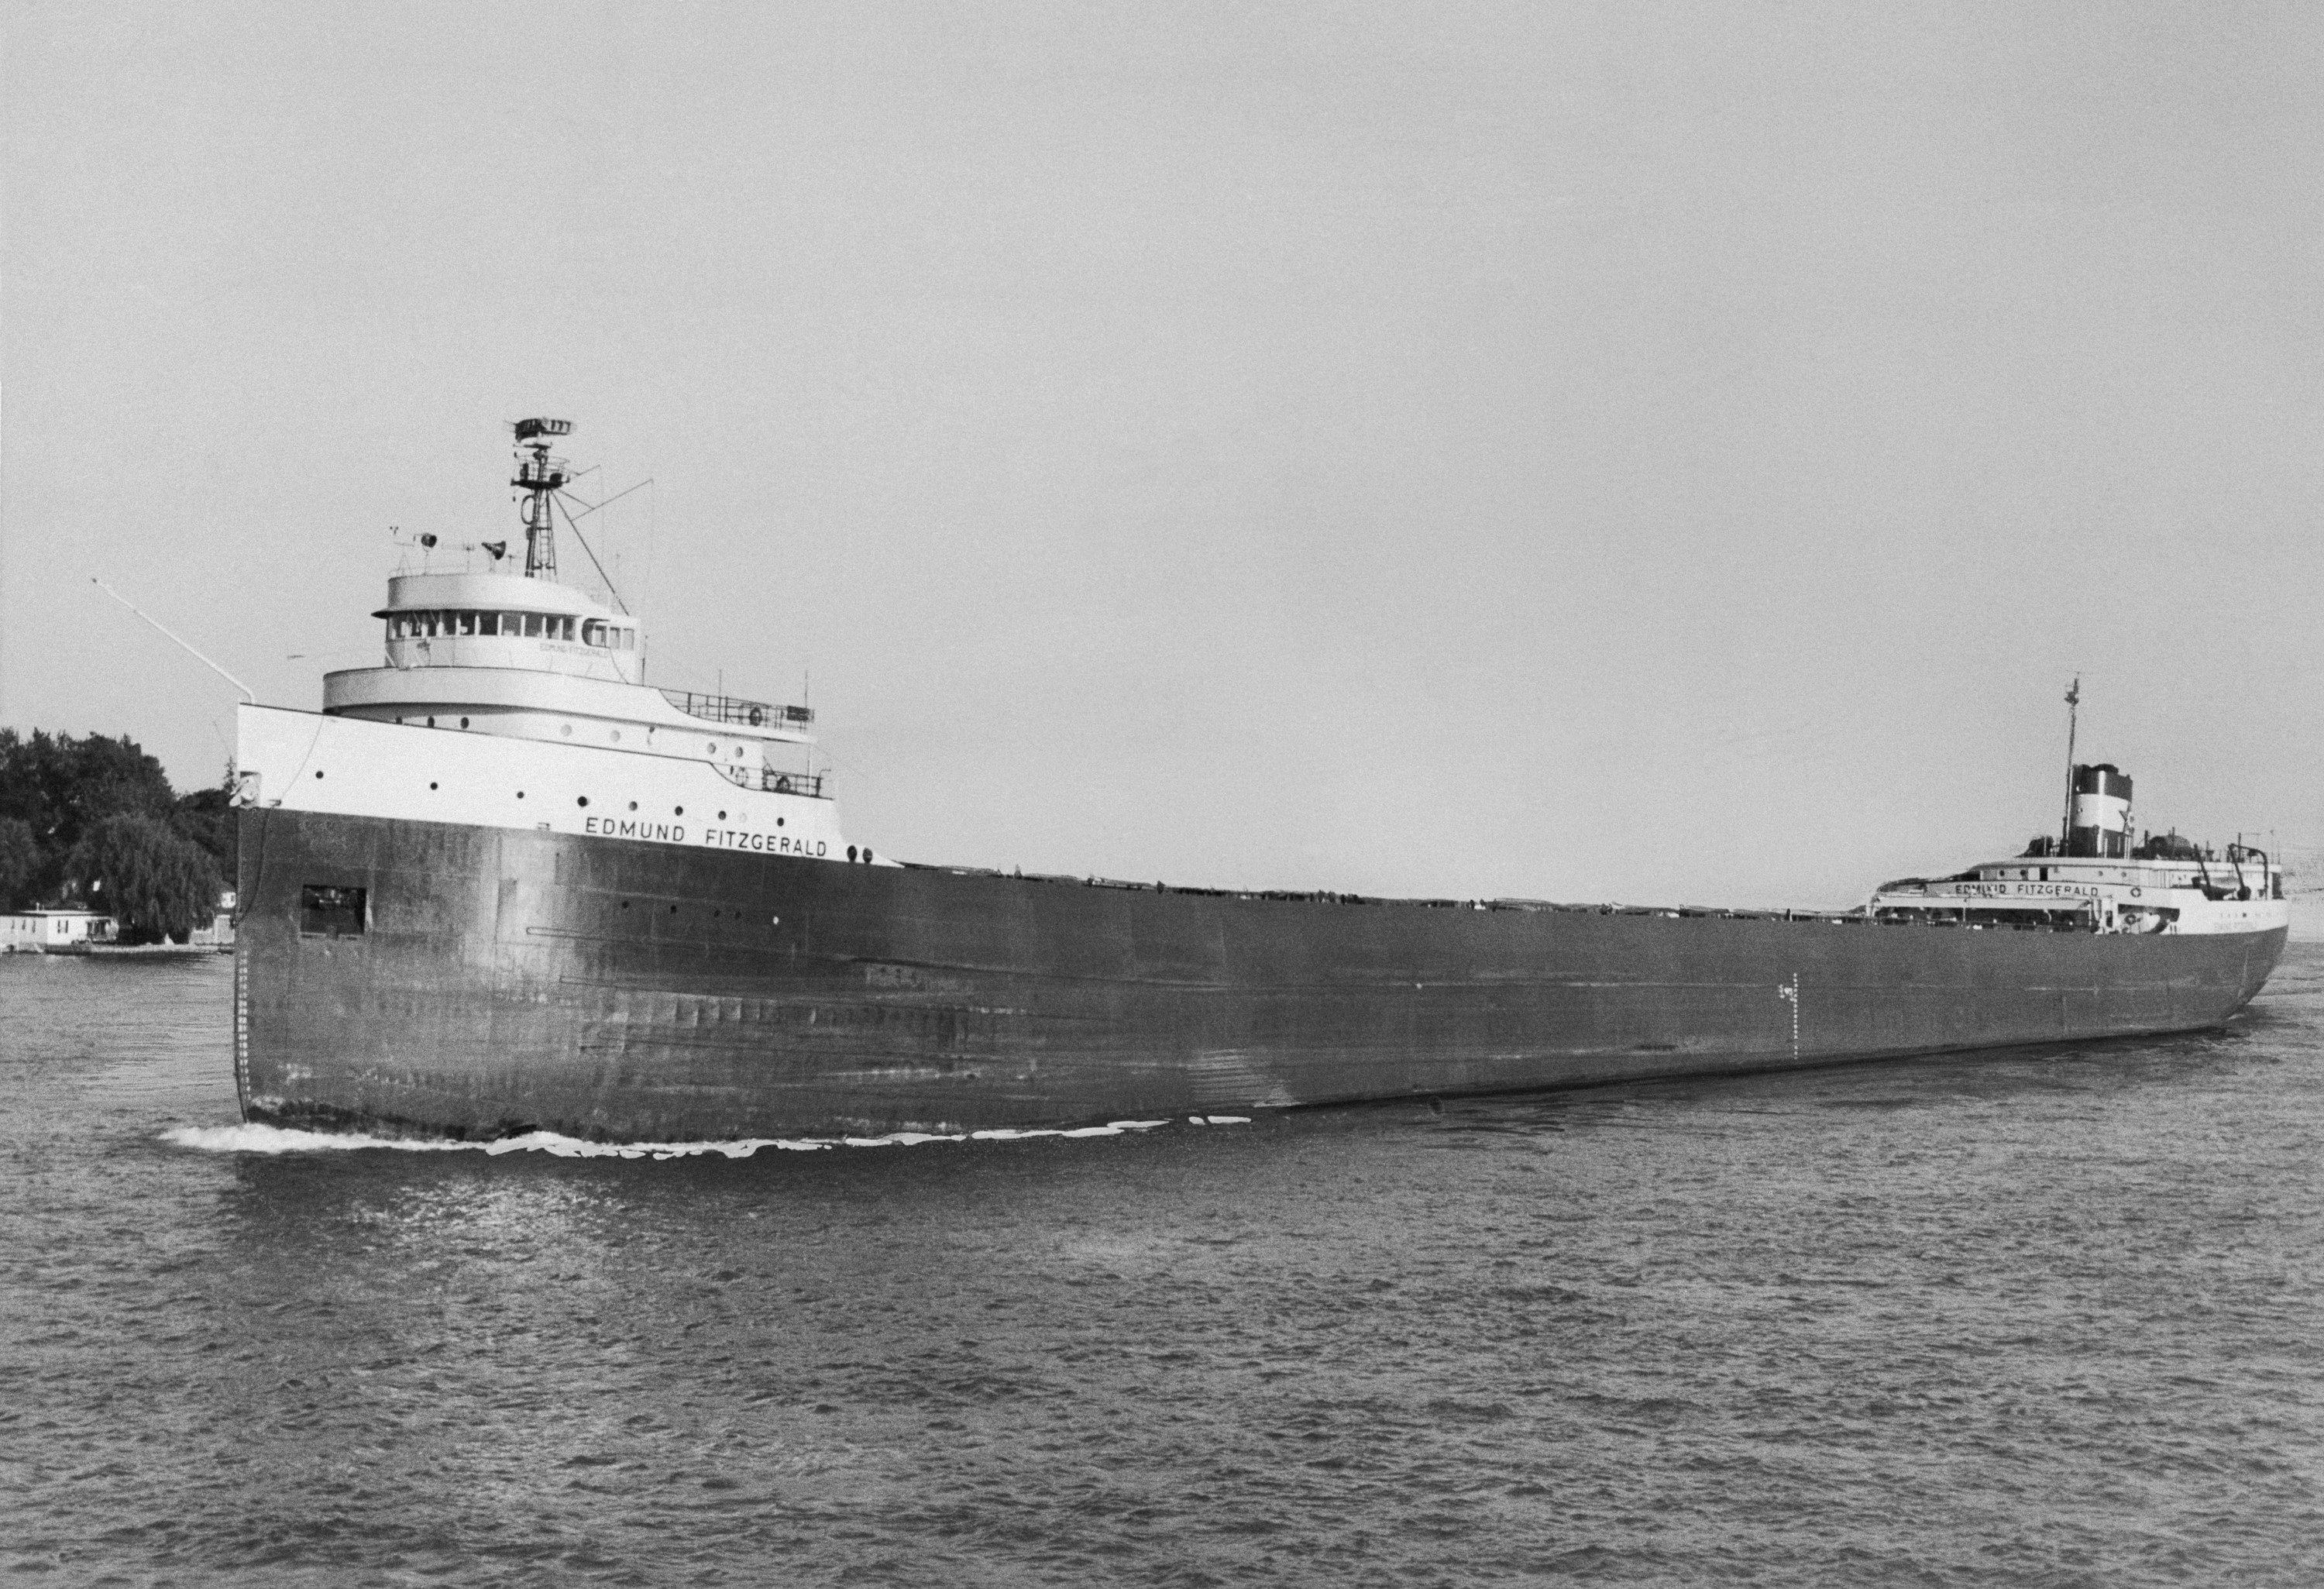 729-foot SS Edmund Fitzgerald on Lake Superior